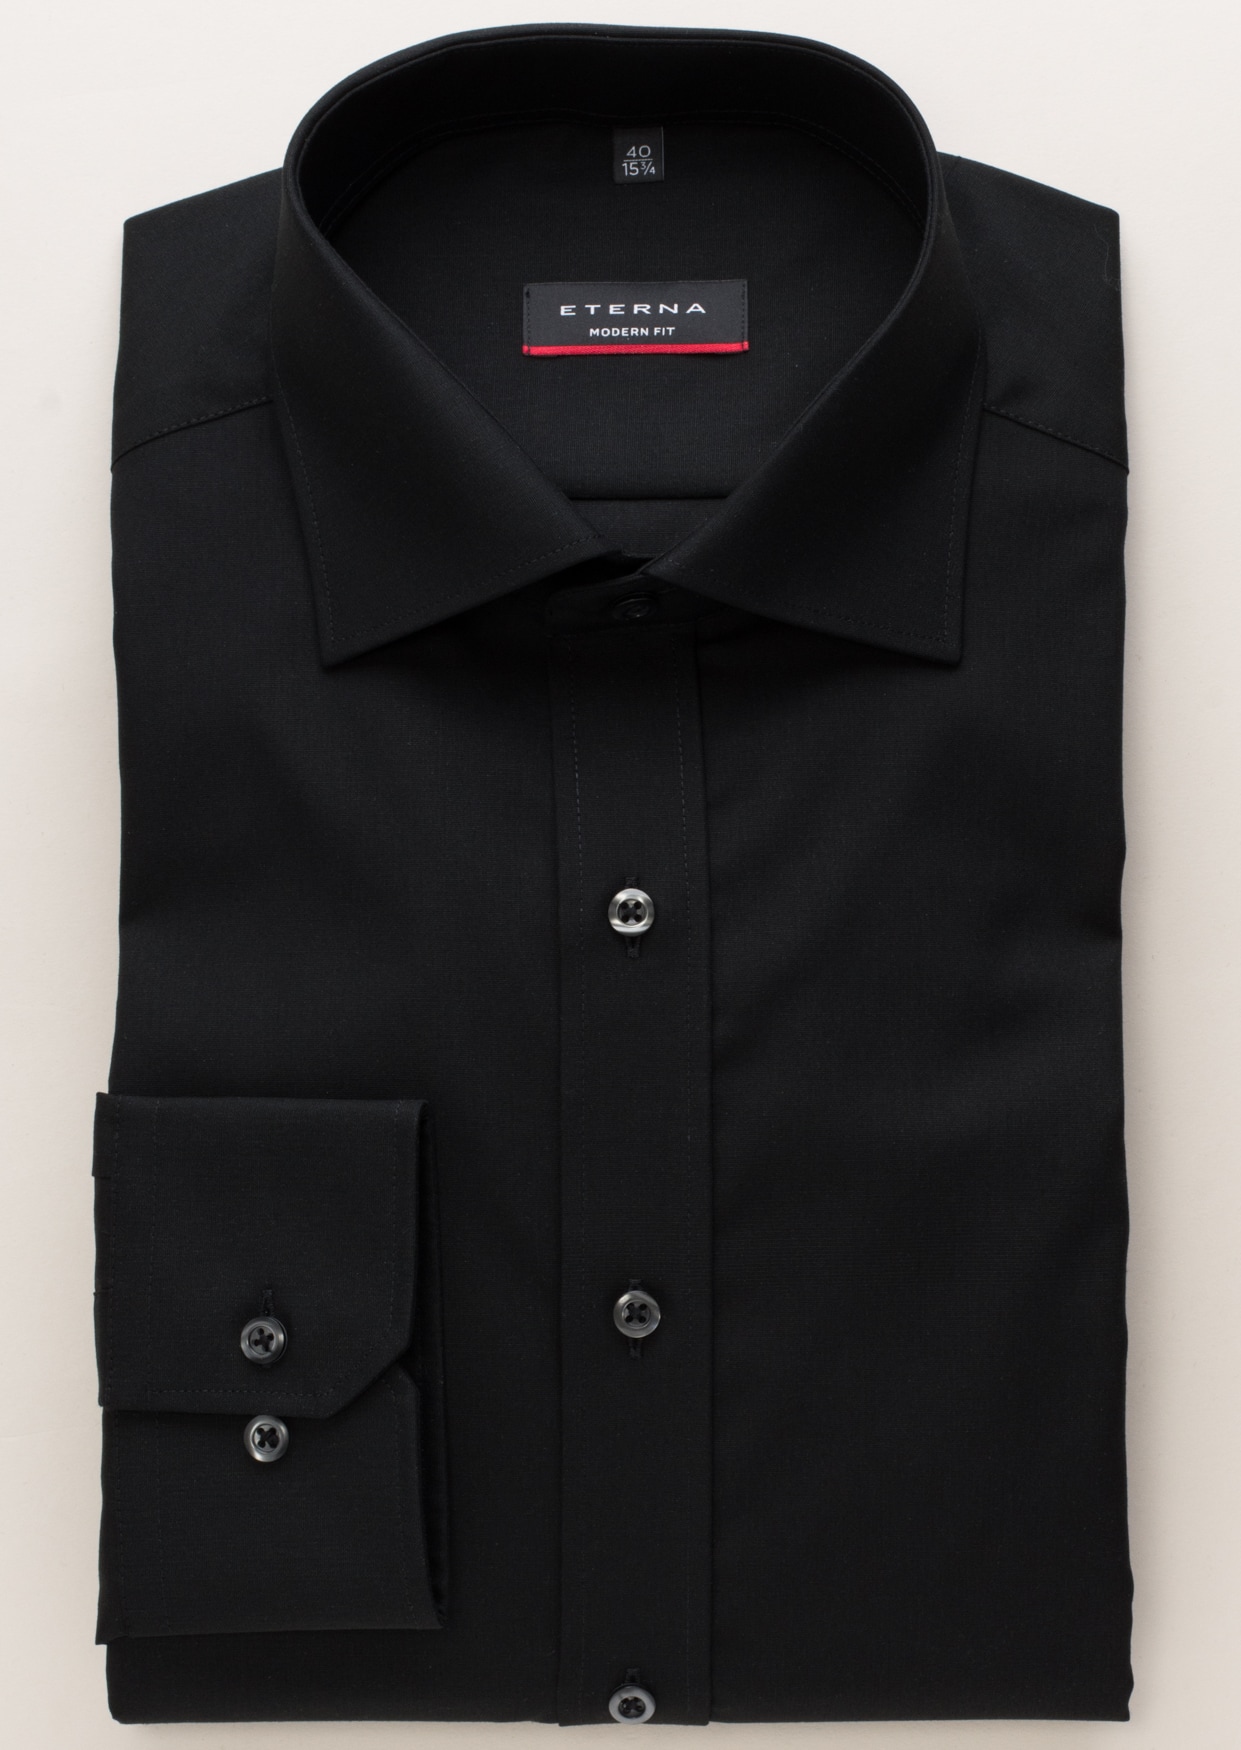 MODERN FIT Original plain | 42 | | Shirt 1SH00113-03-91-42-1/1 black in long | black sleeve